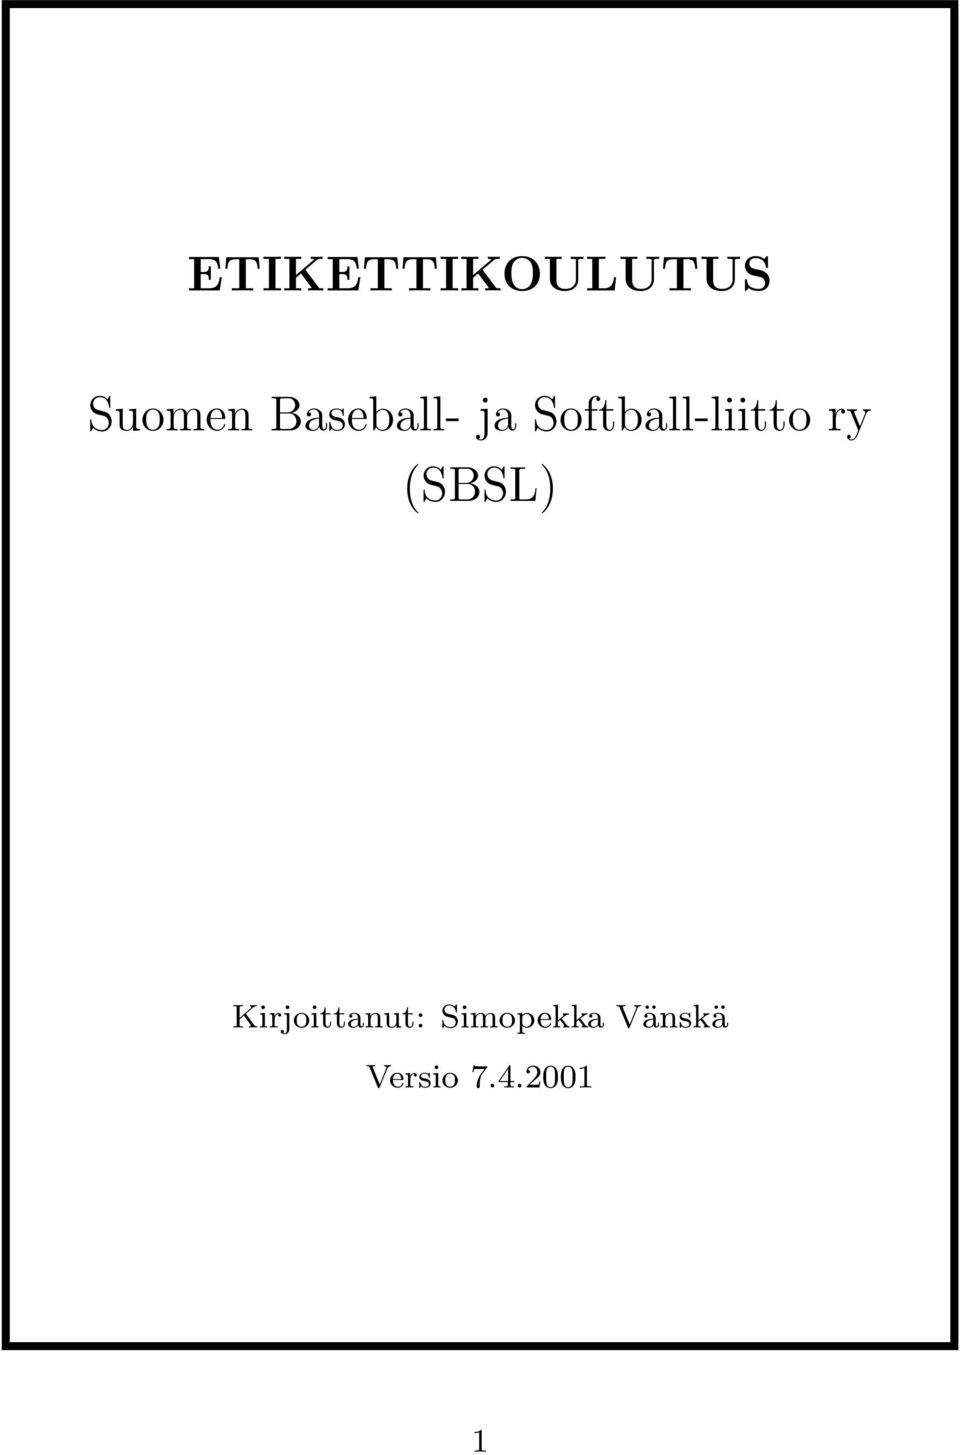 Softball-liitto ry (SBSL)